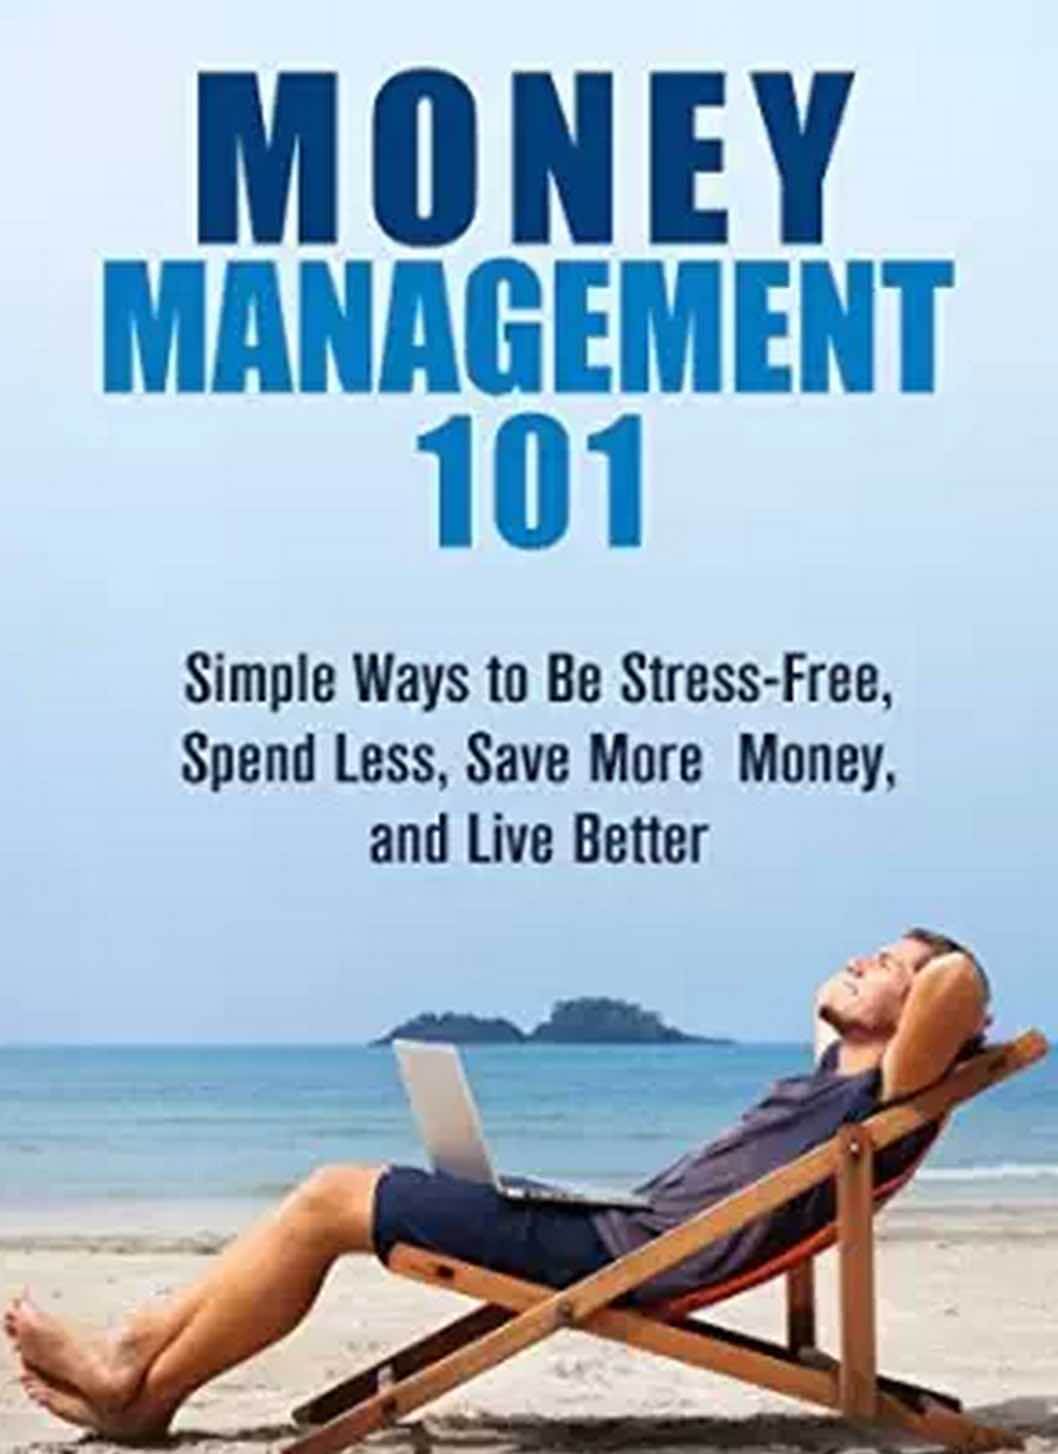 Money Management 101 book